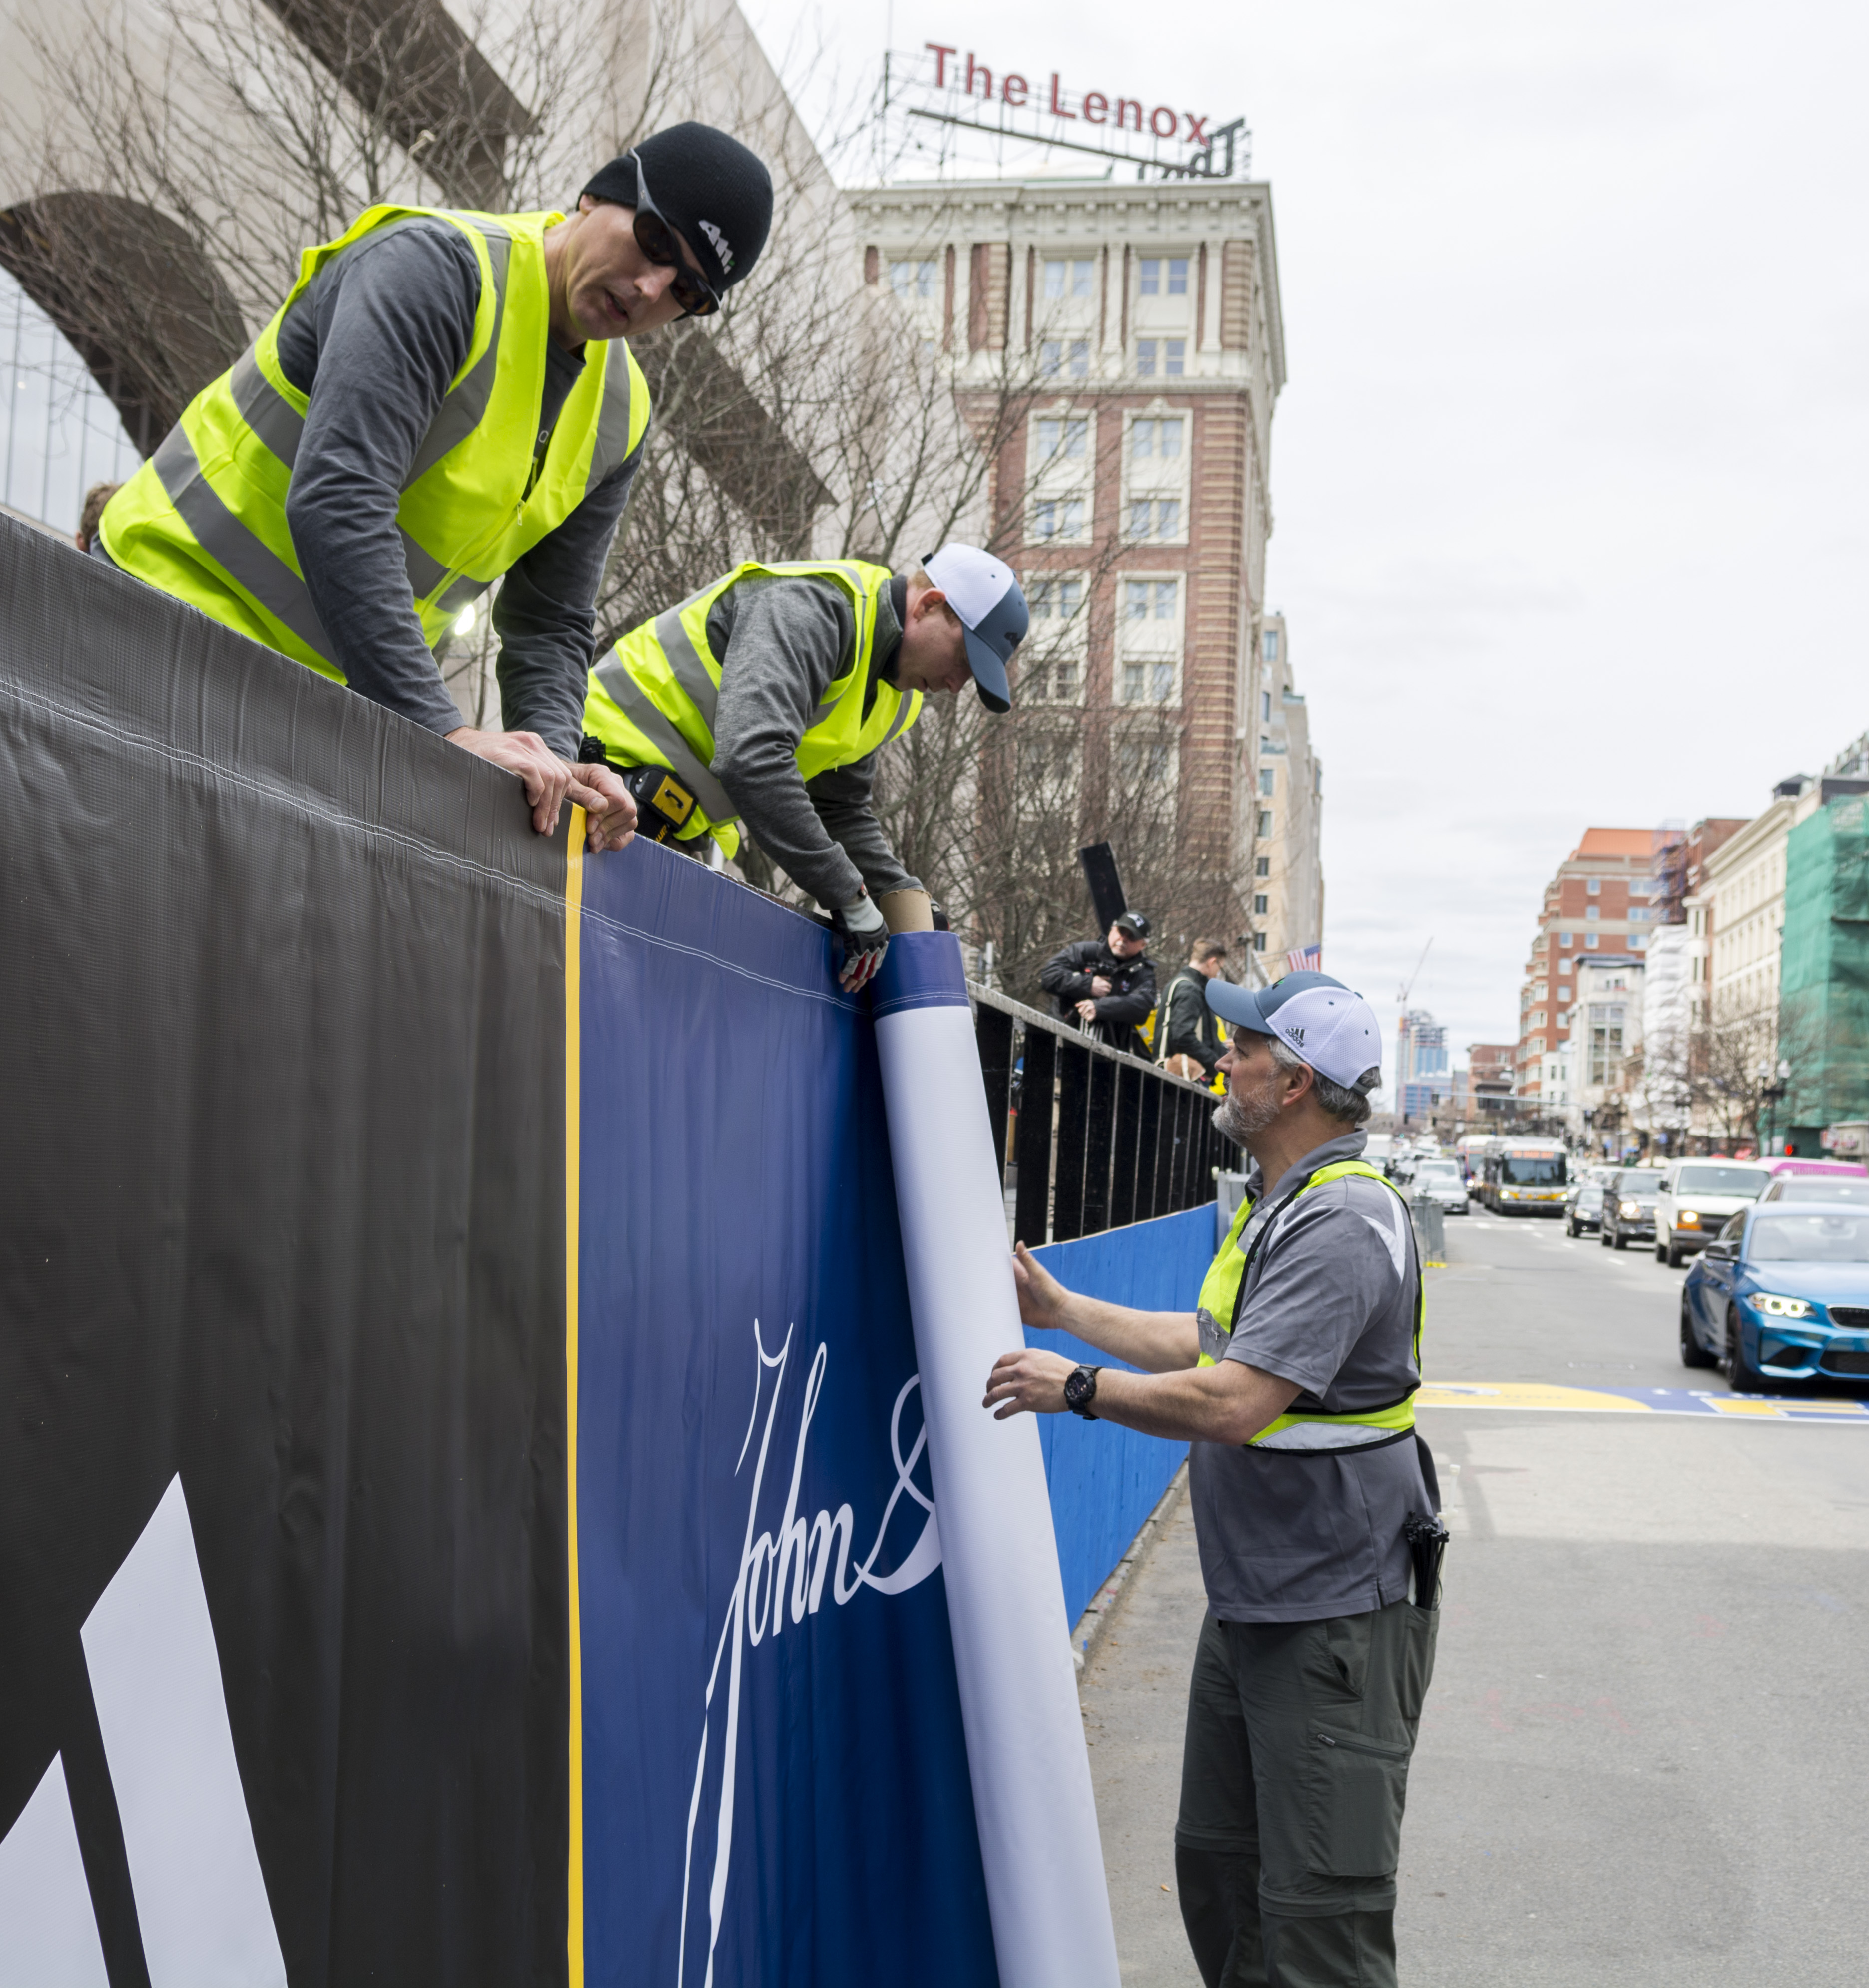 Boston Marathon Finish Line Vinyl Banners Install